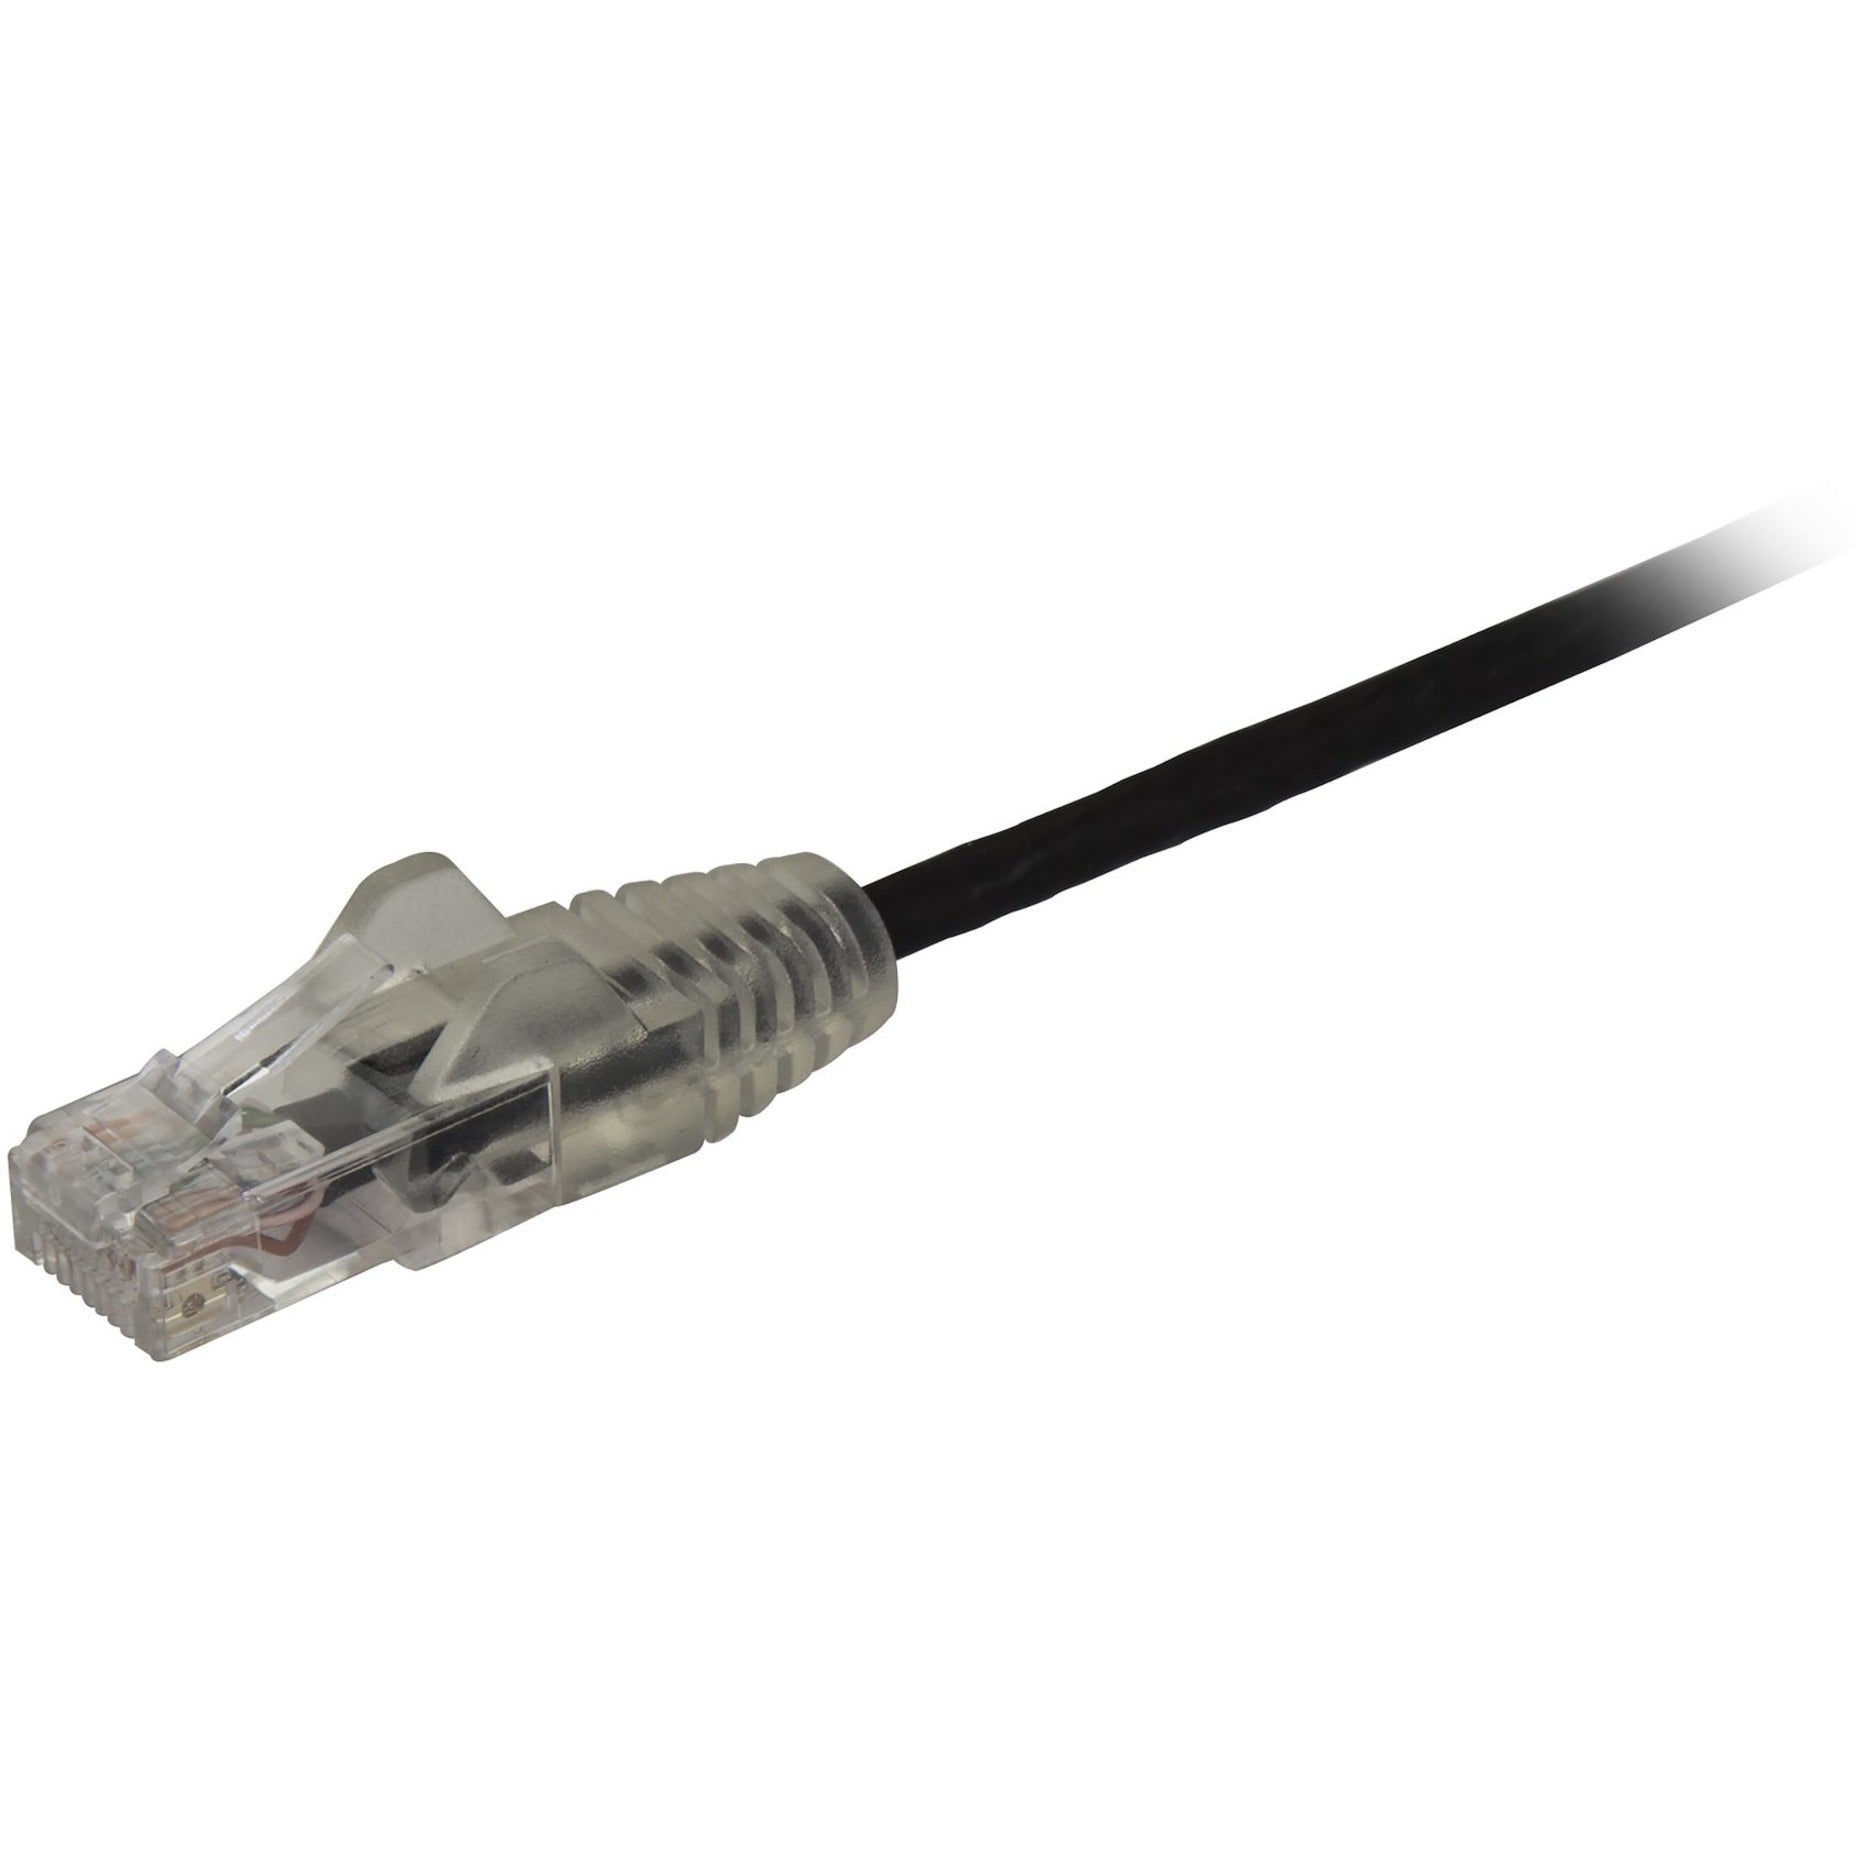 StarTech.com N6PAT3BKS Cat.6 Patch Network Cable, 3 ft Black Ethernet Cable - Slim, Snagless RJ45 Connectors, Cat6 Cable, Cat6 Patch Cable, Cat6 Network Cable